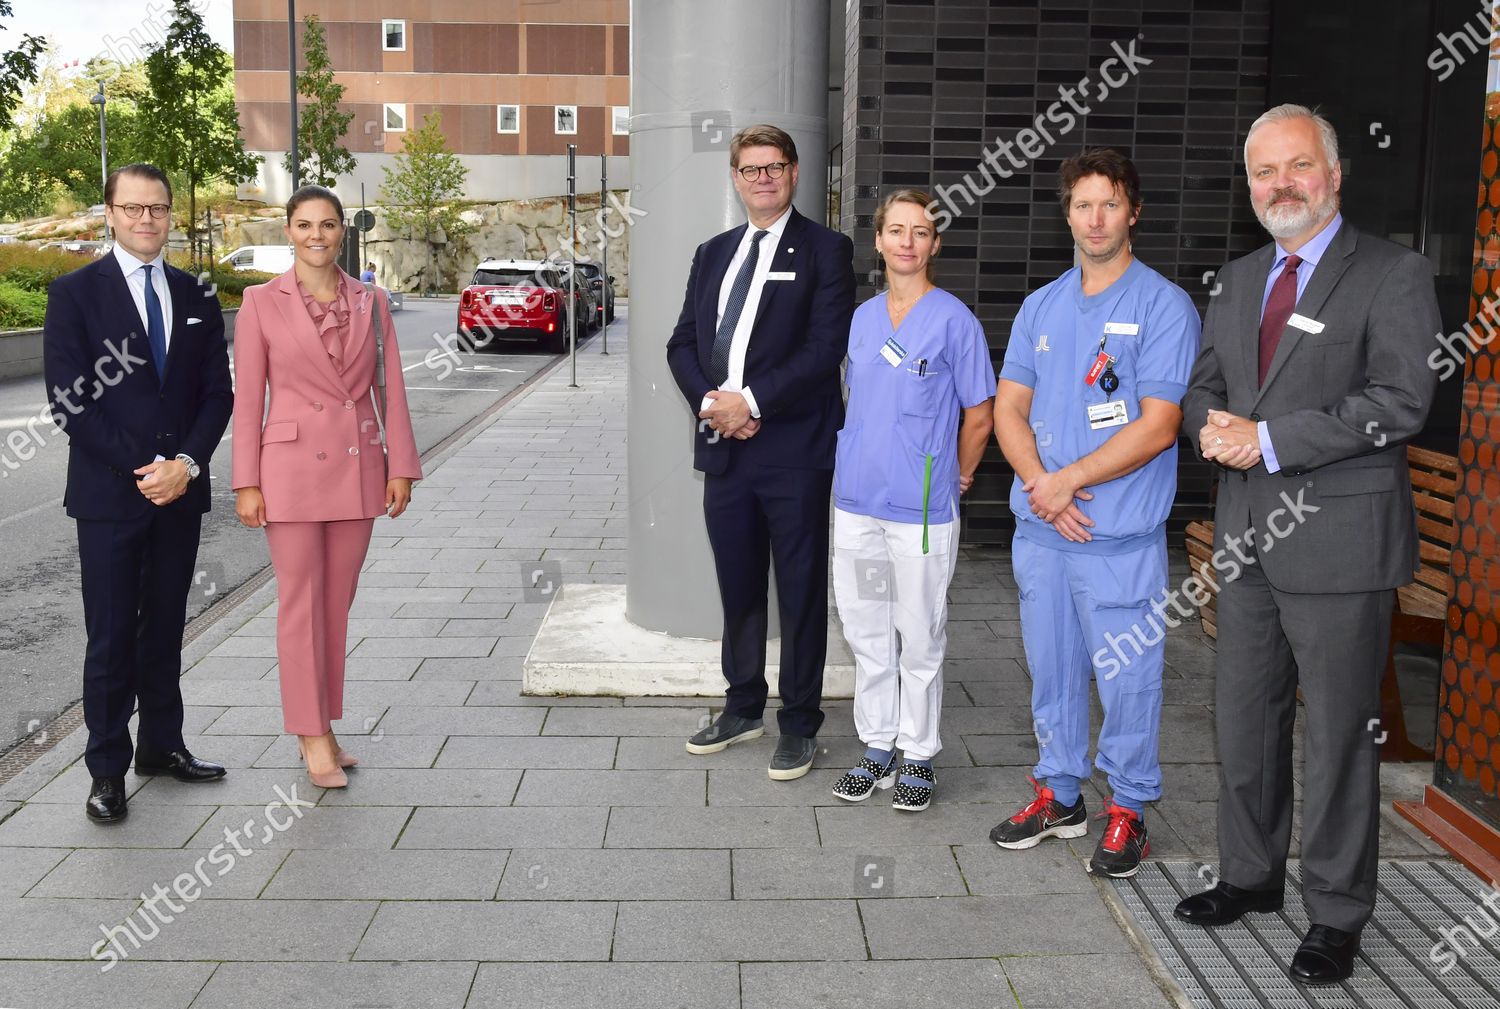 crown-princess-victoria-and-prince-daniel-visit-to-ecmo-center-karolinska-university-hospital-stockholm-sweden-shutterstock-editorial-10804247b.jpg